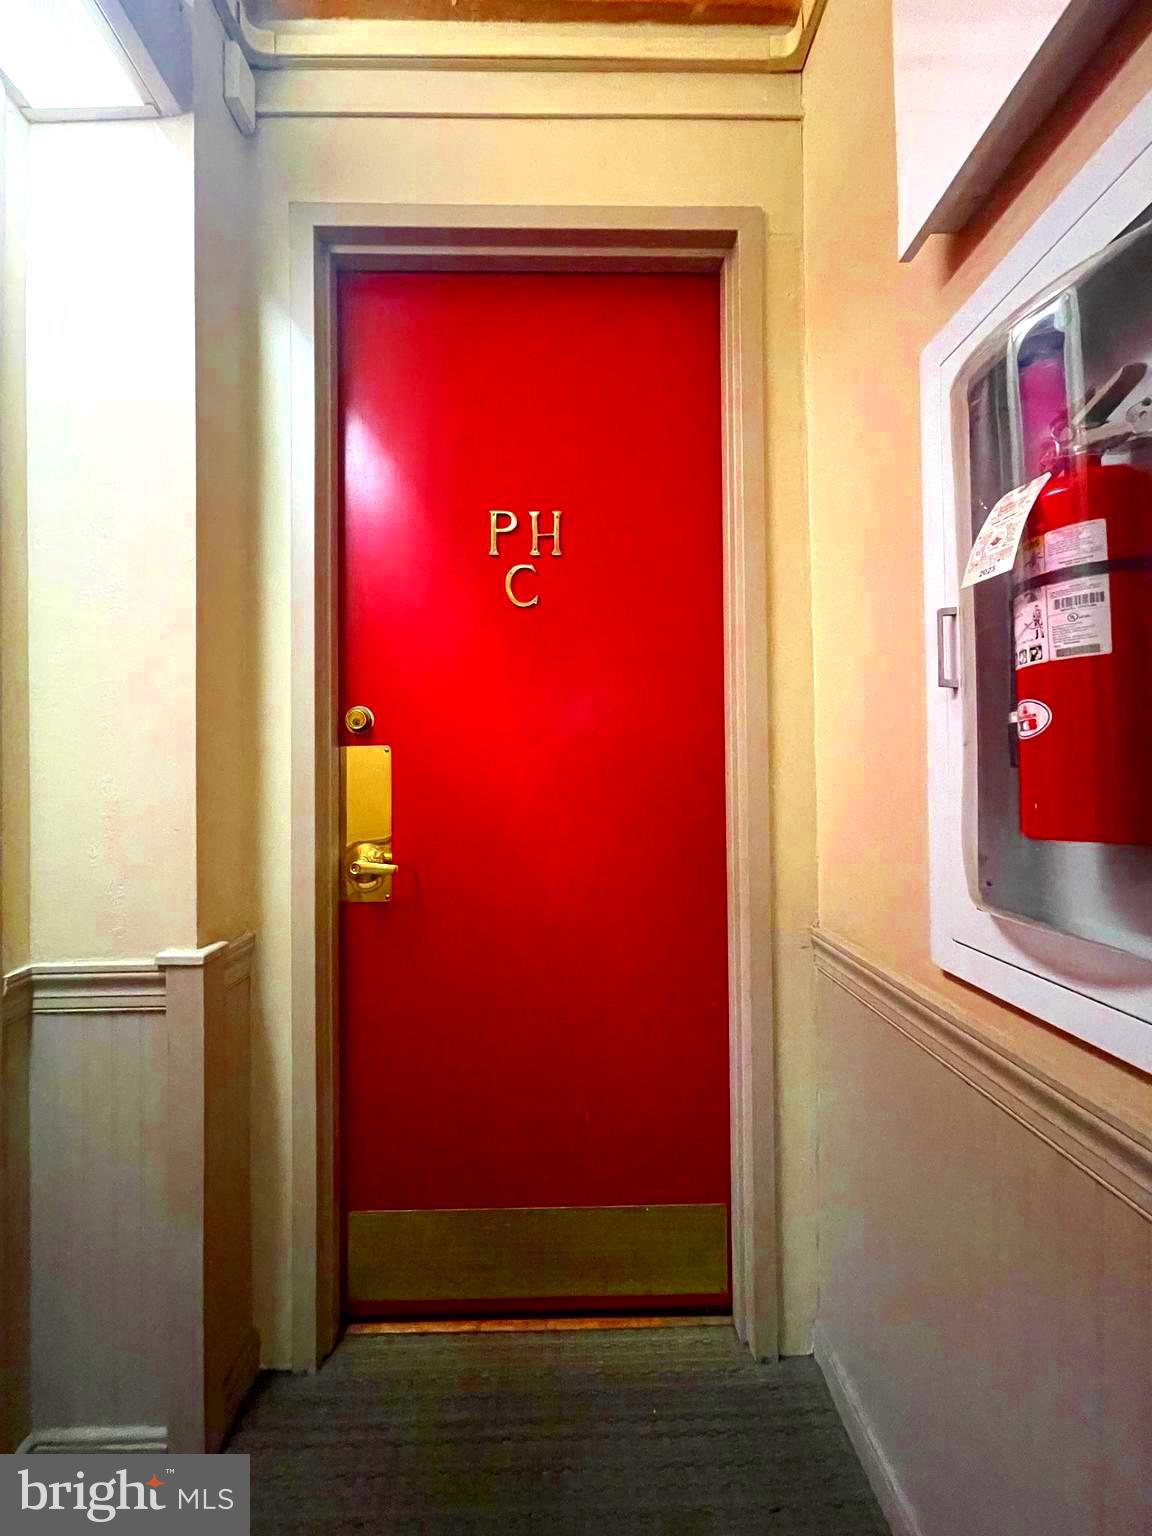 a view of a red door